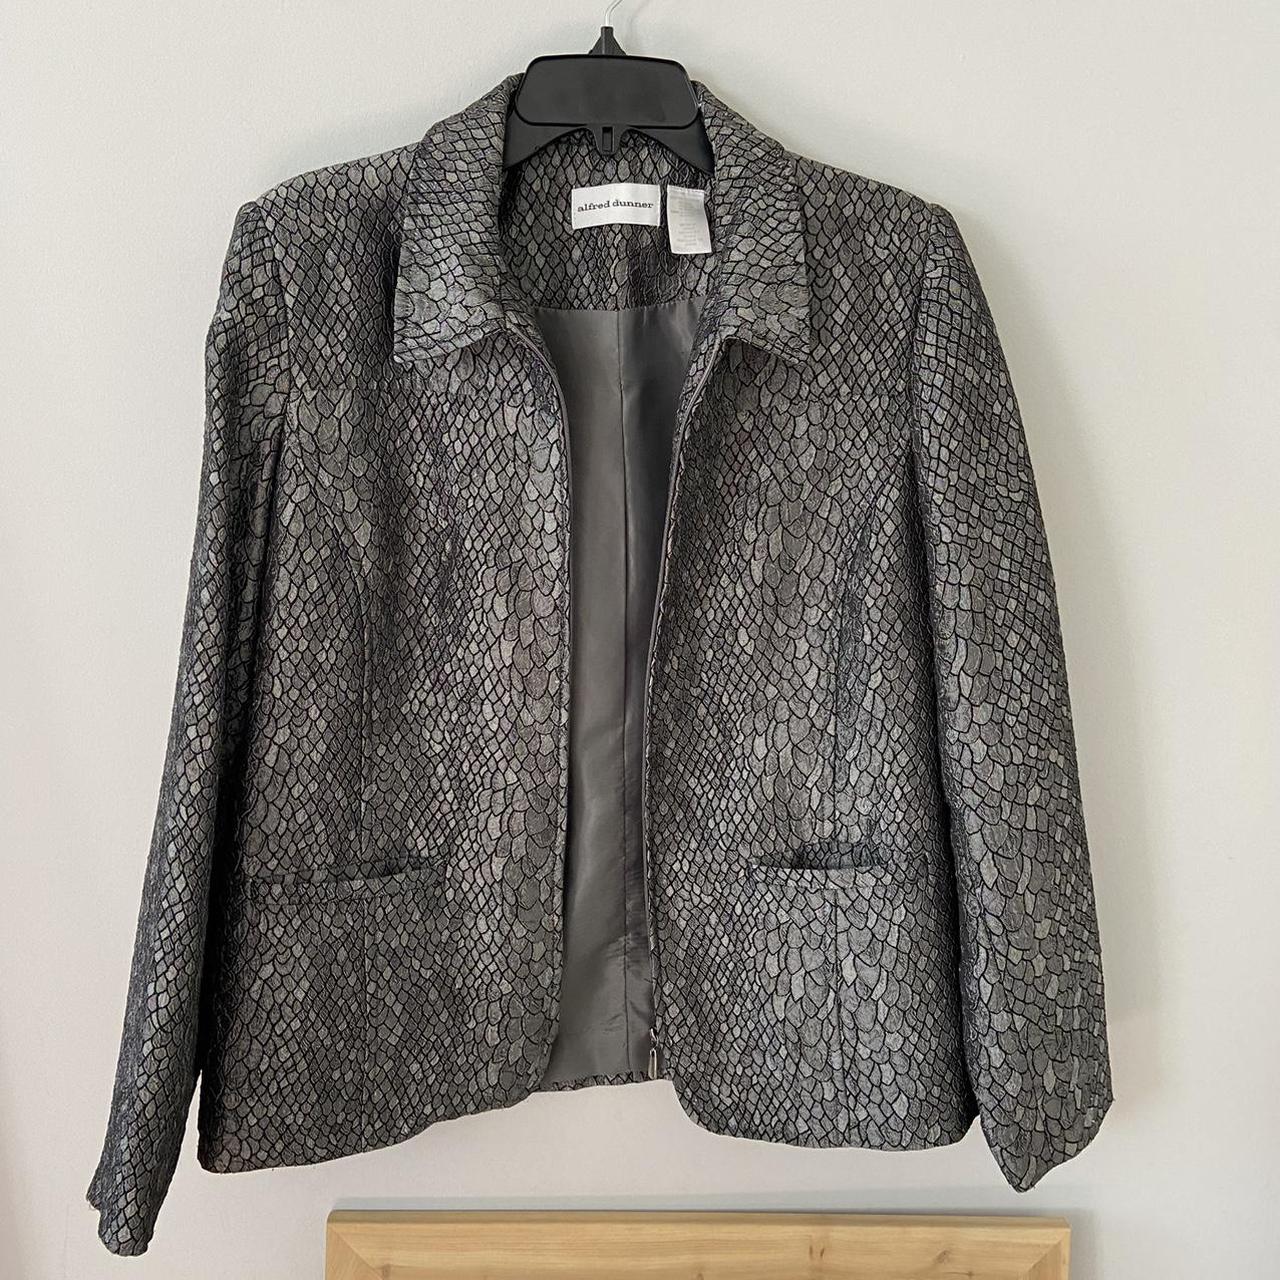 Grey crocodile print textured jacket. Fabric crinkle... - Depop